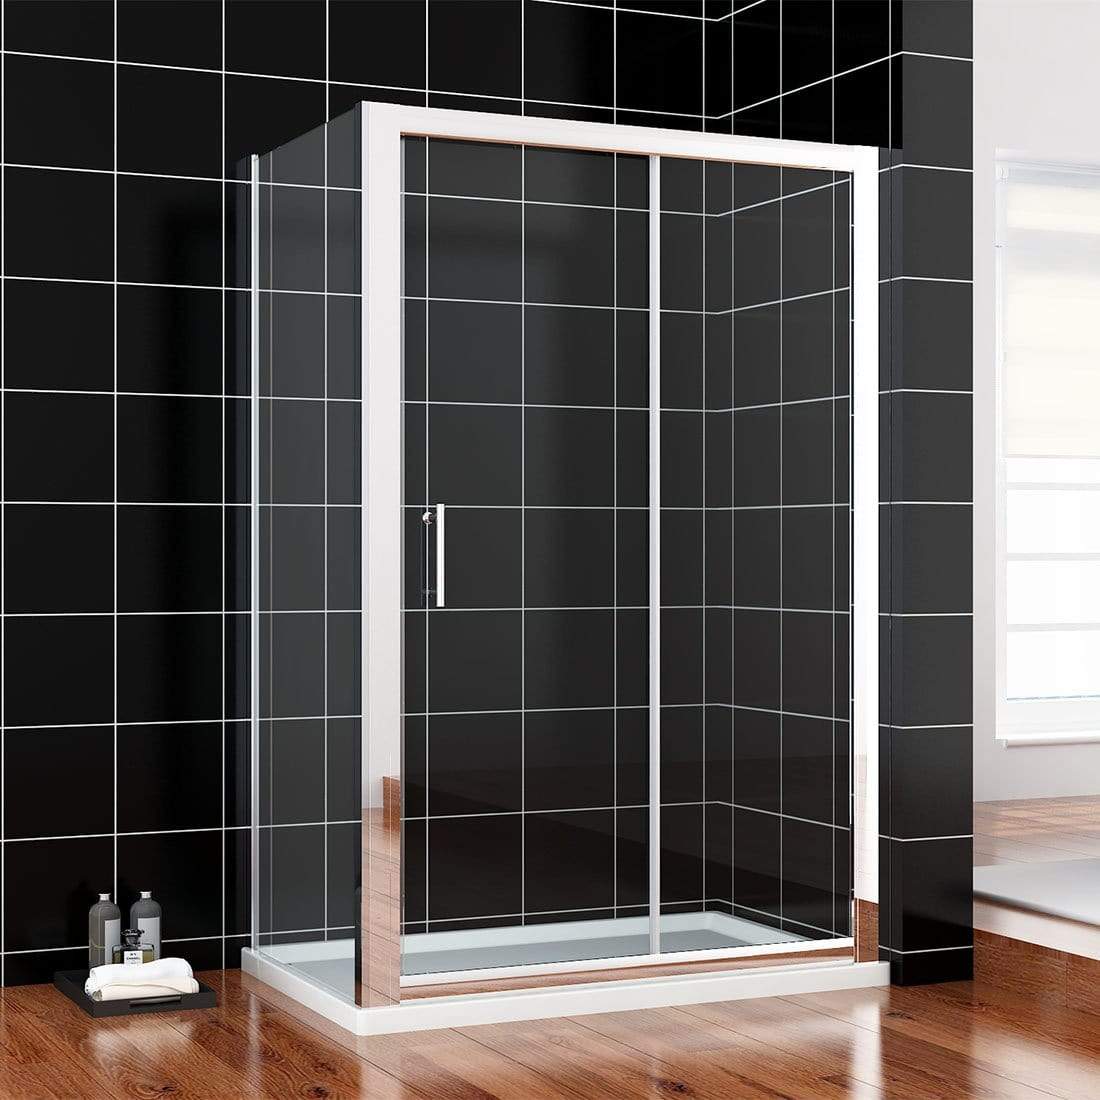 shower screens